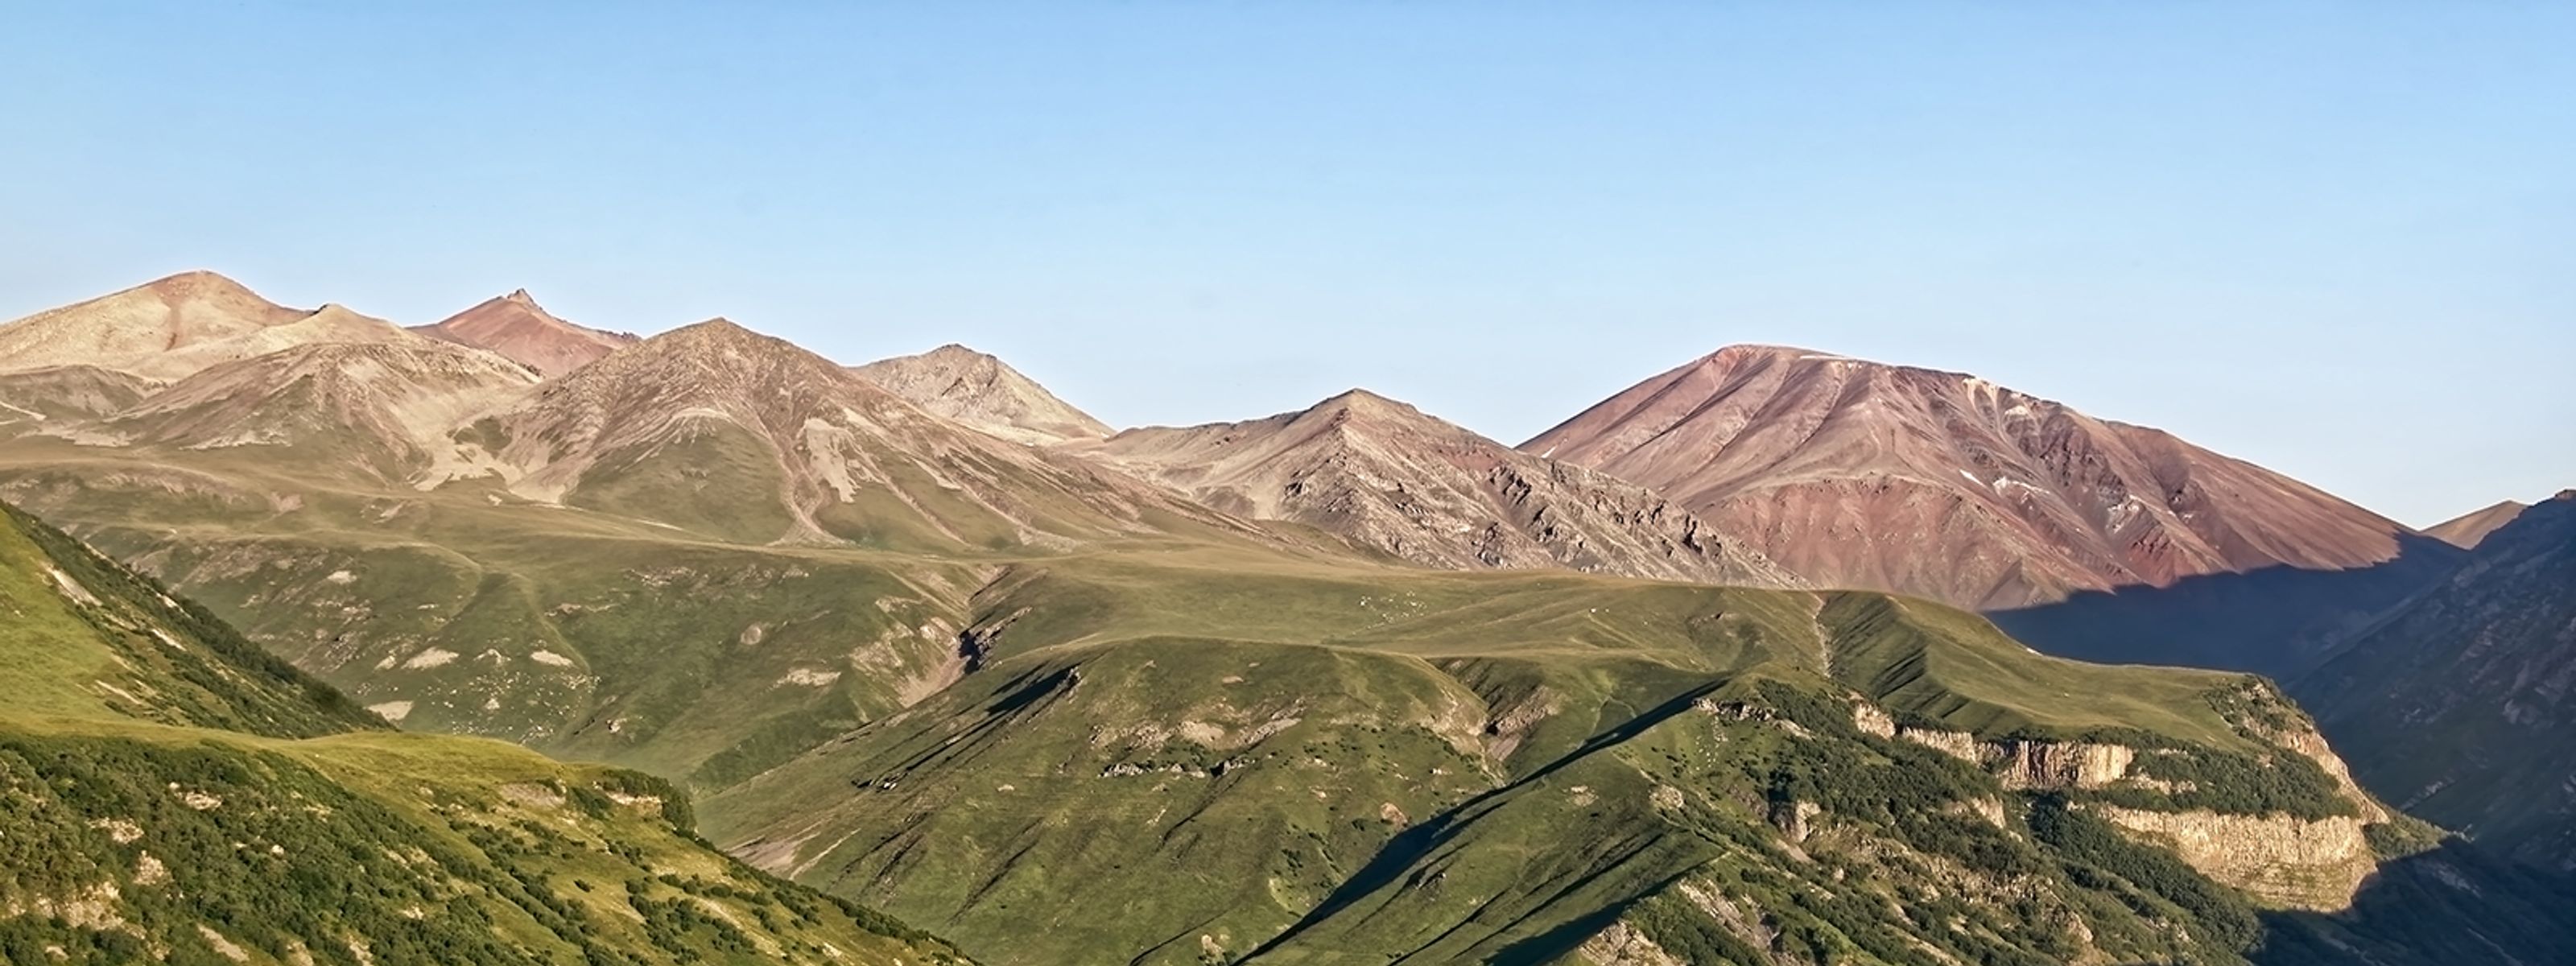 Bergwelt des Großen Kaukasus, Georgien